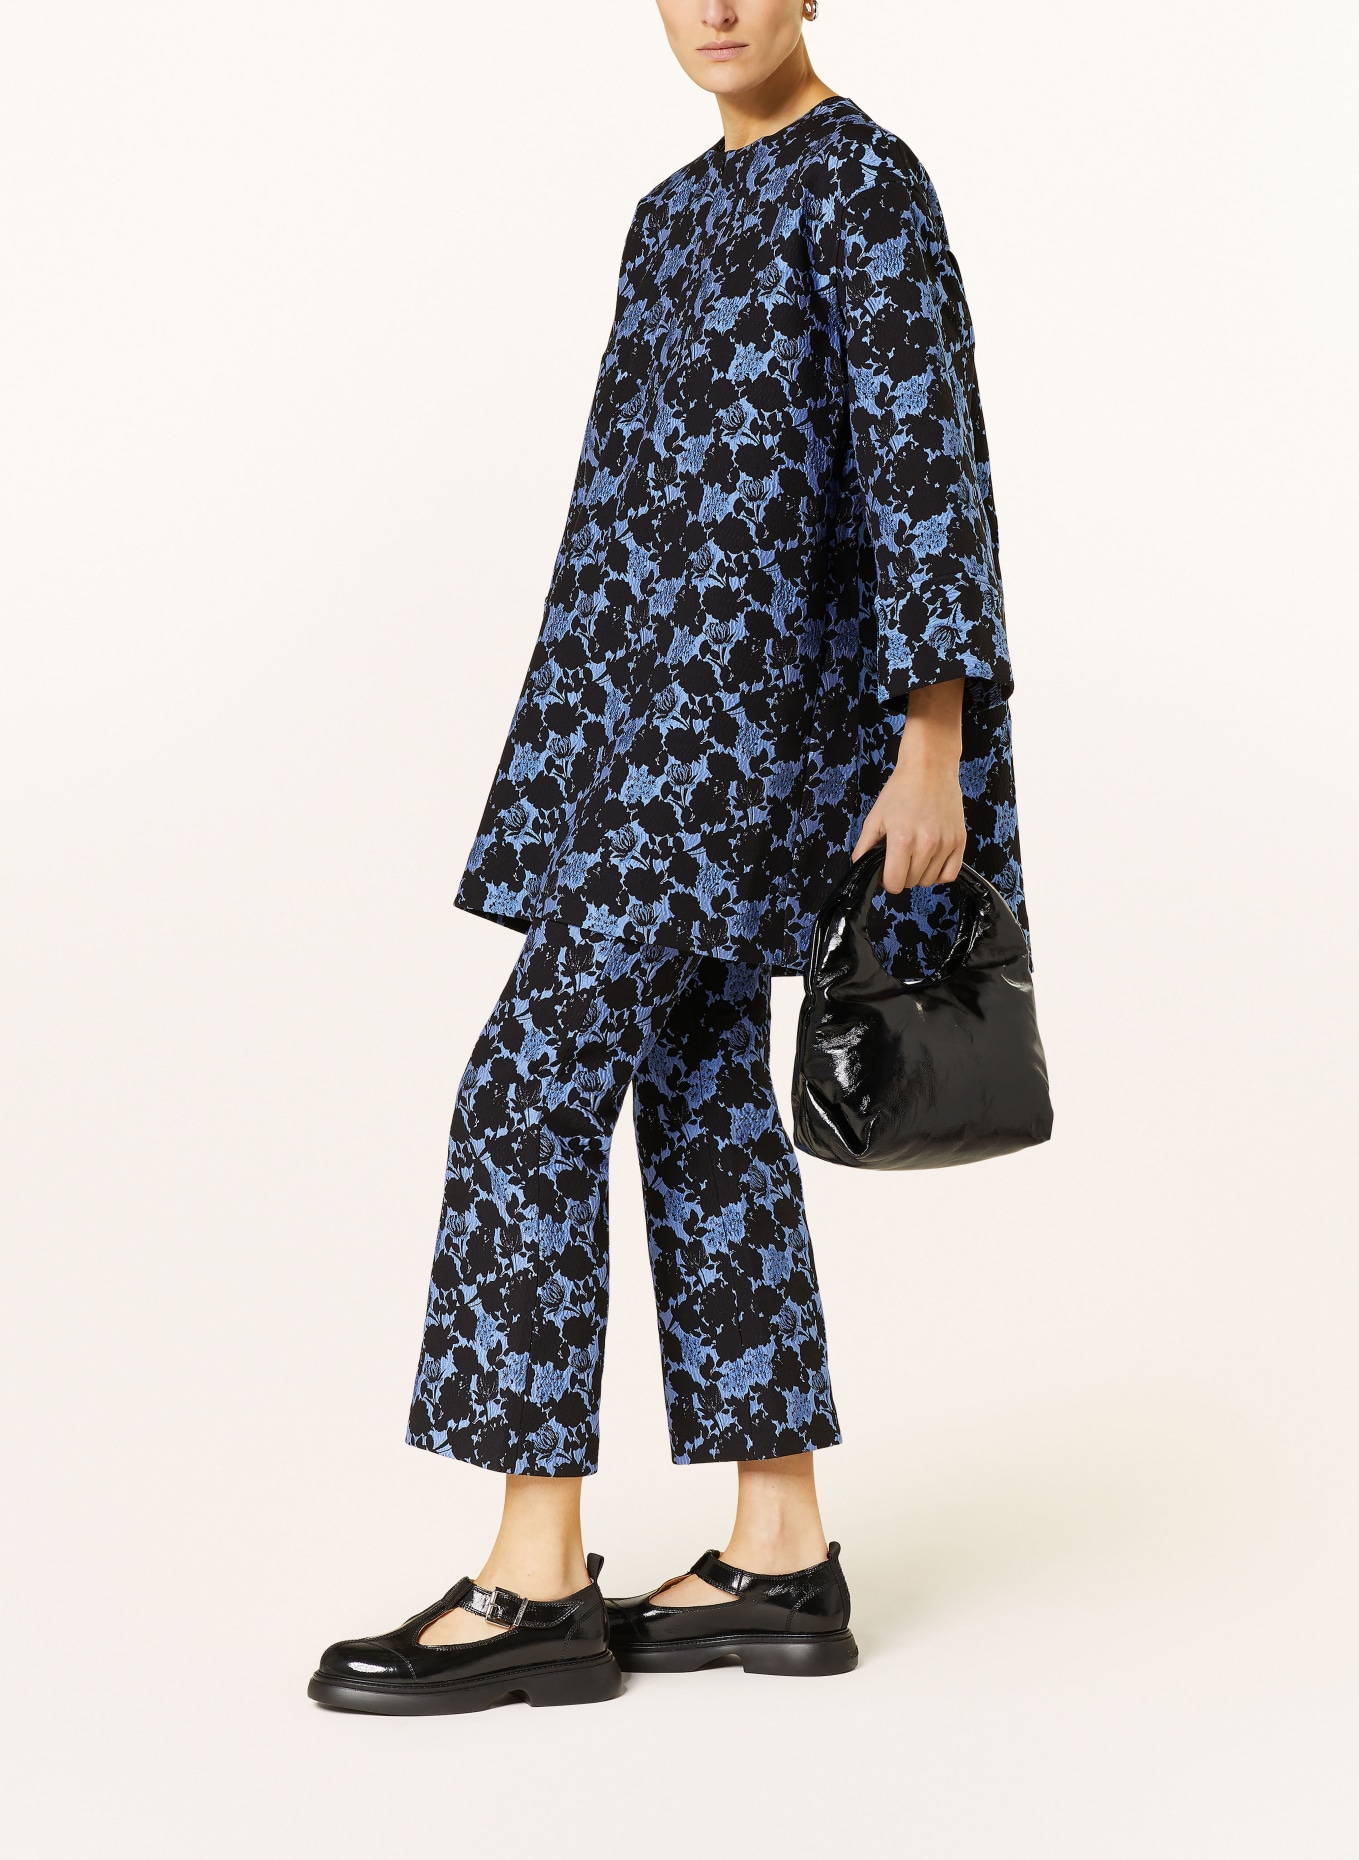 BAUM UND PFERDGARTEN 7/8 trousers NENNE made of jacquard, Color: BLACK/ BLUE (Image 4)